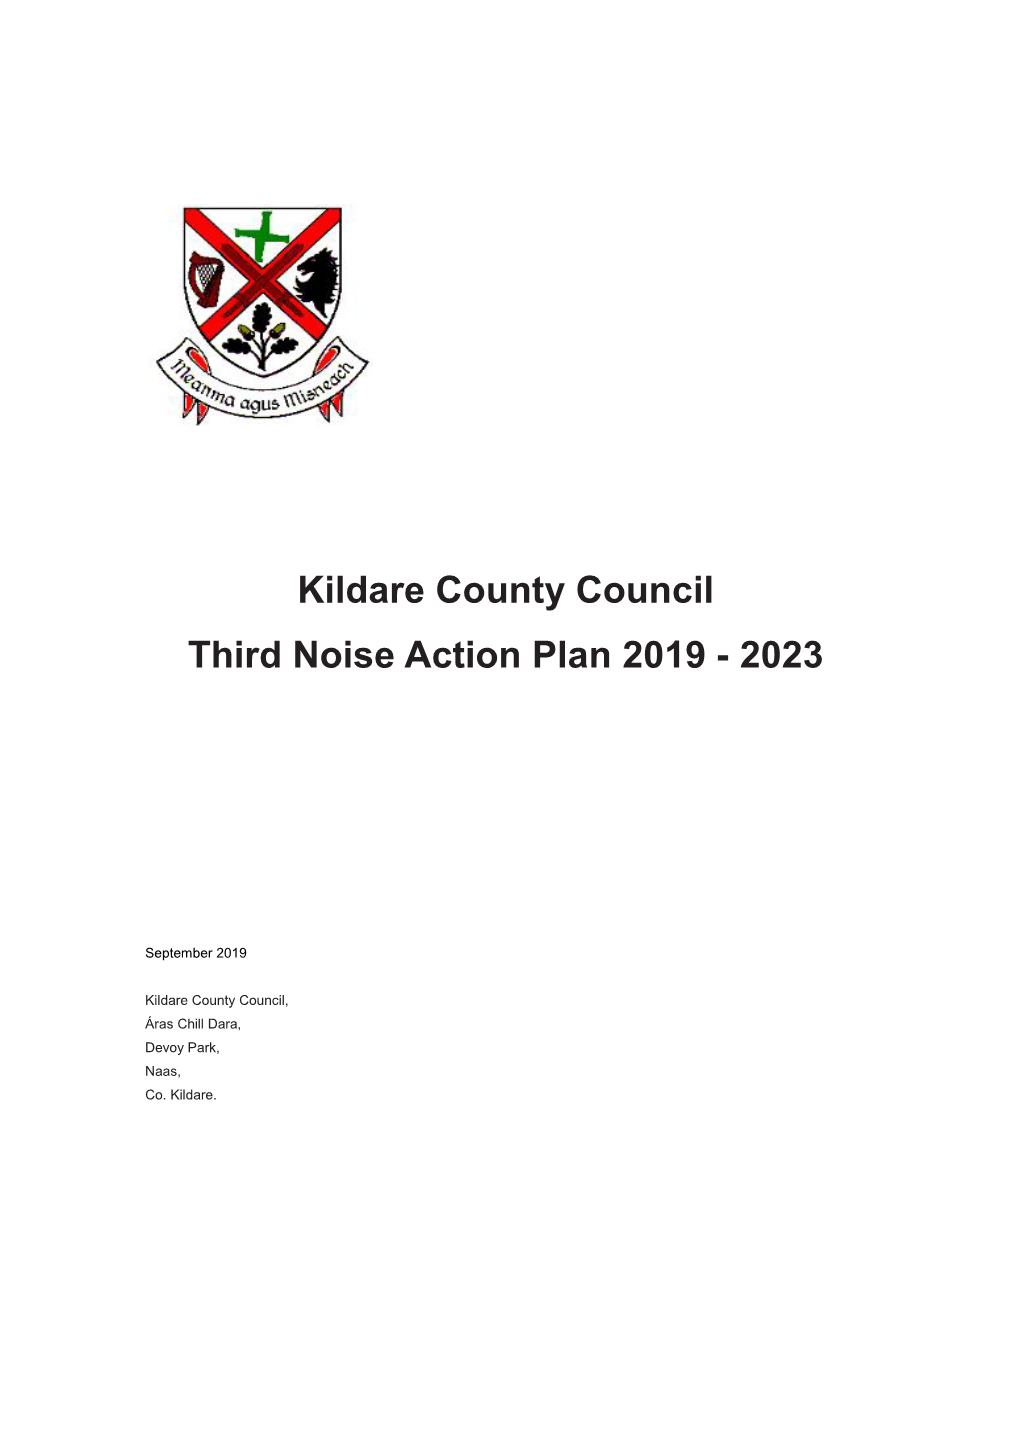 Kildare County Council Third Noise Action Plan 2019 - 2023